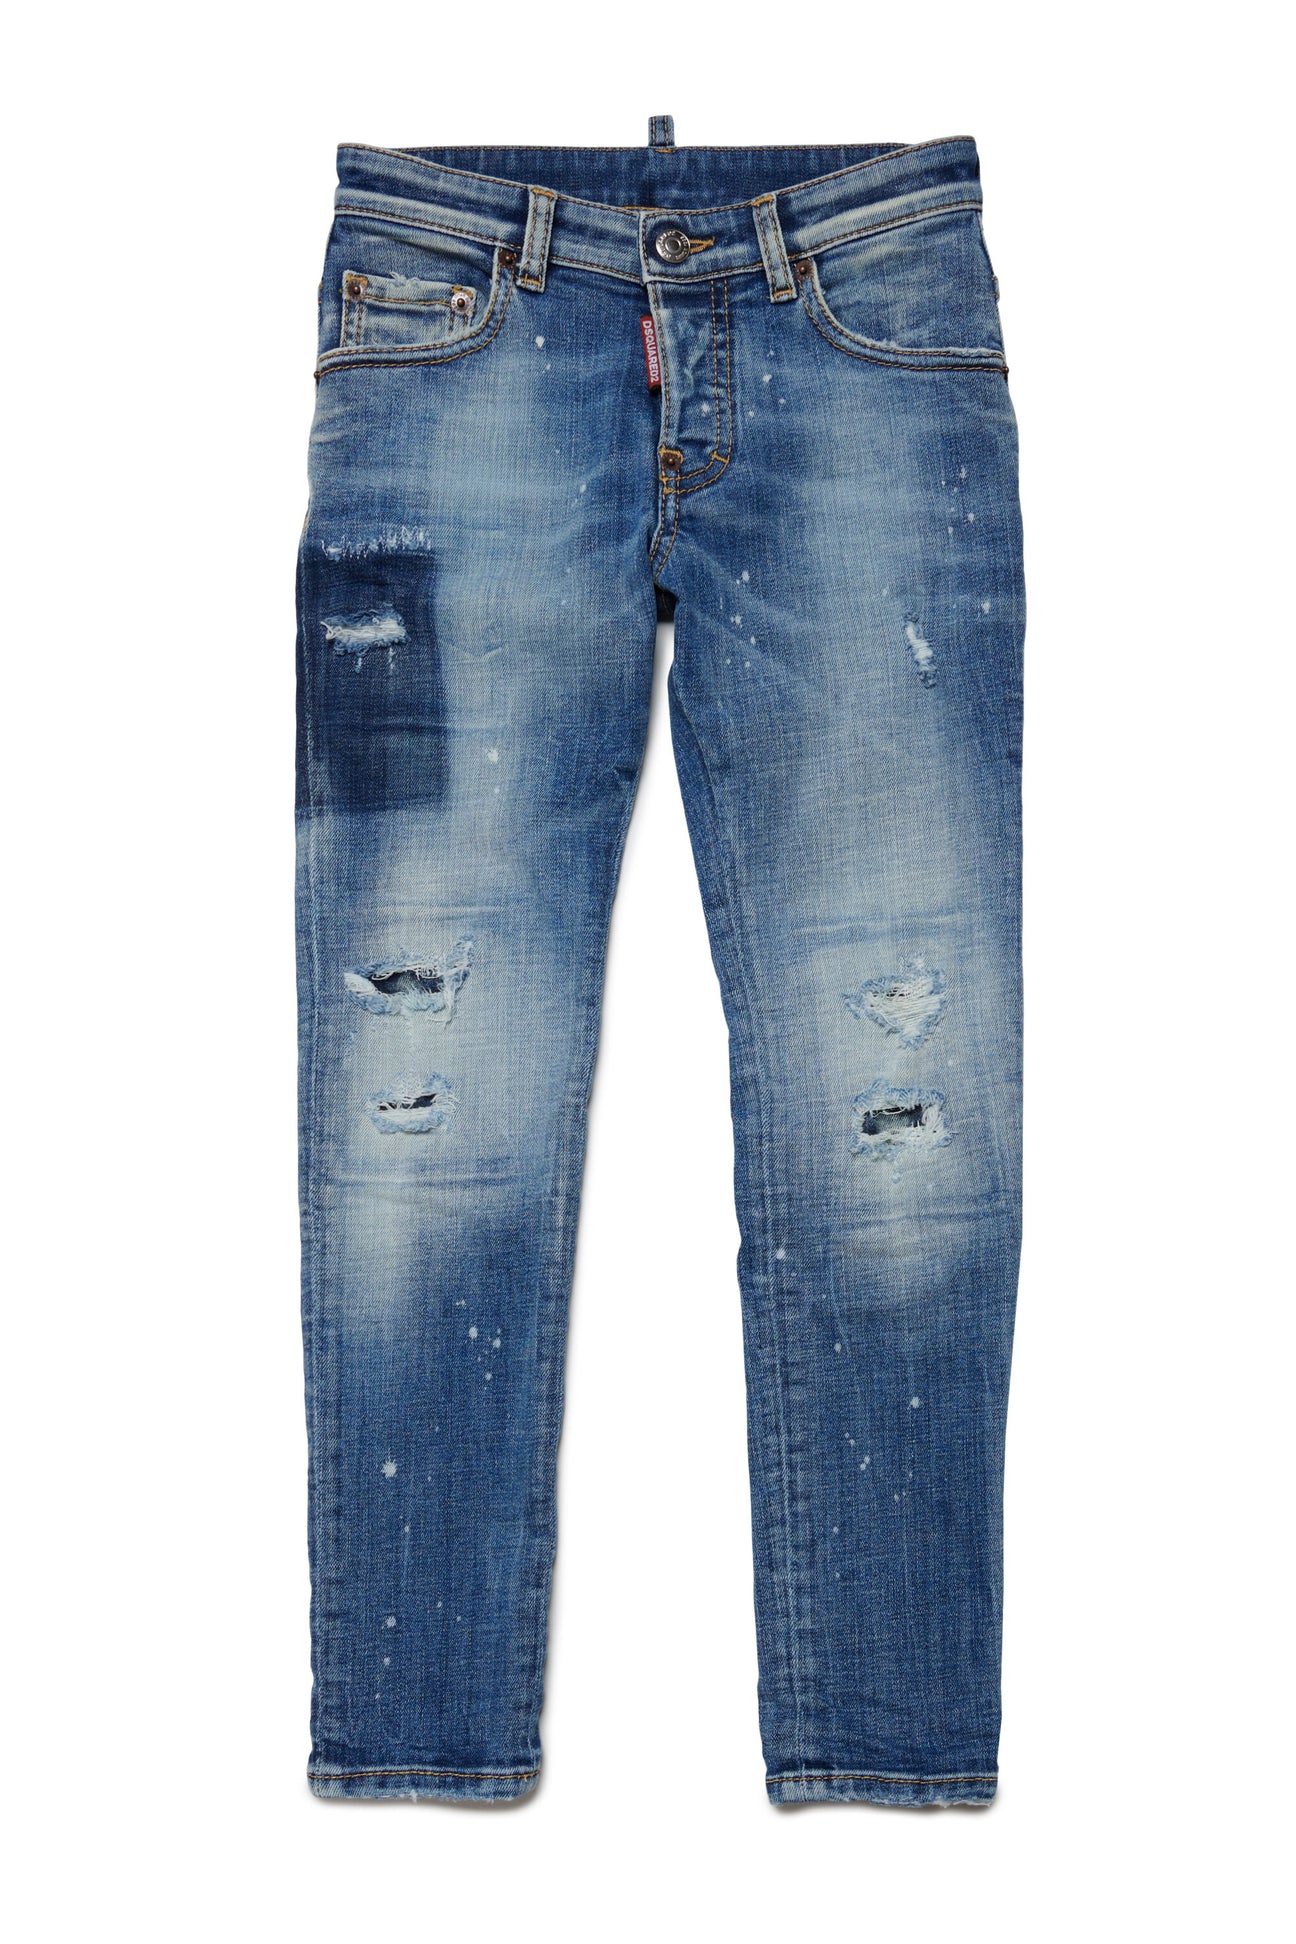 Jeans skinny blu sfumato con rotture - Skater 